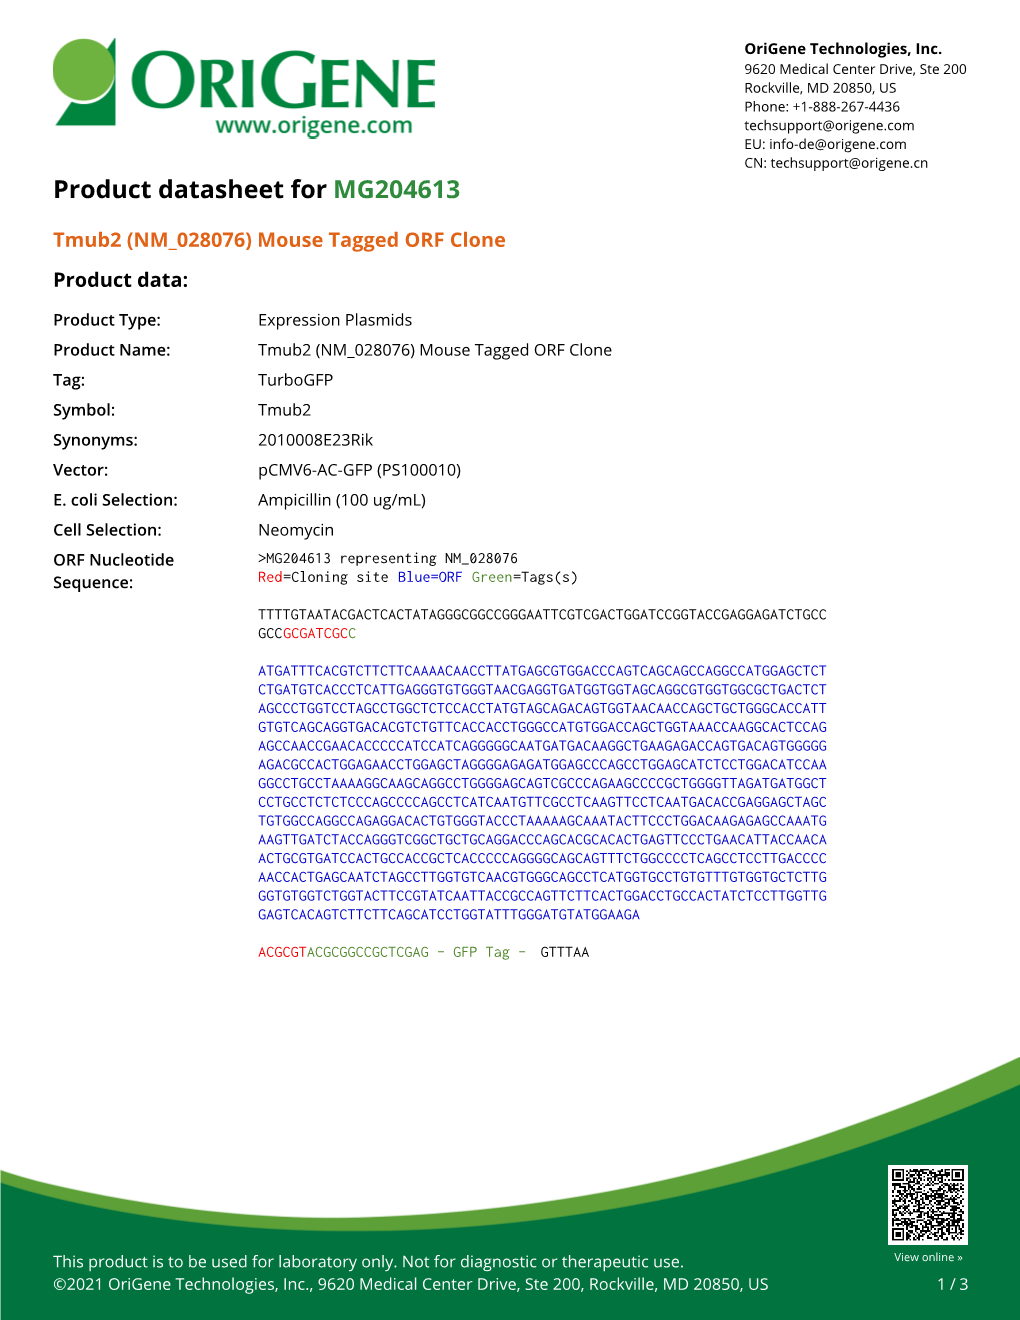 Tmub2 (NM 028076) Mouse Tagged ORF Clone – MG204613